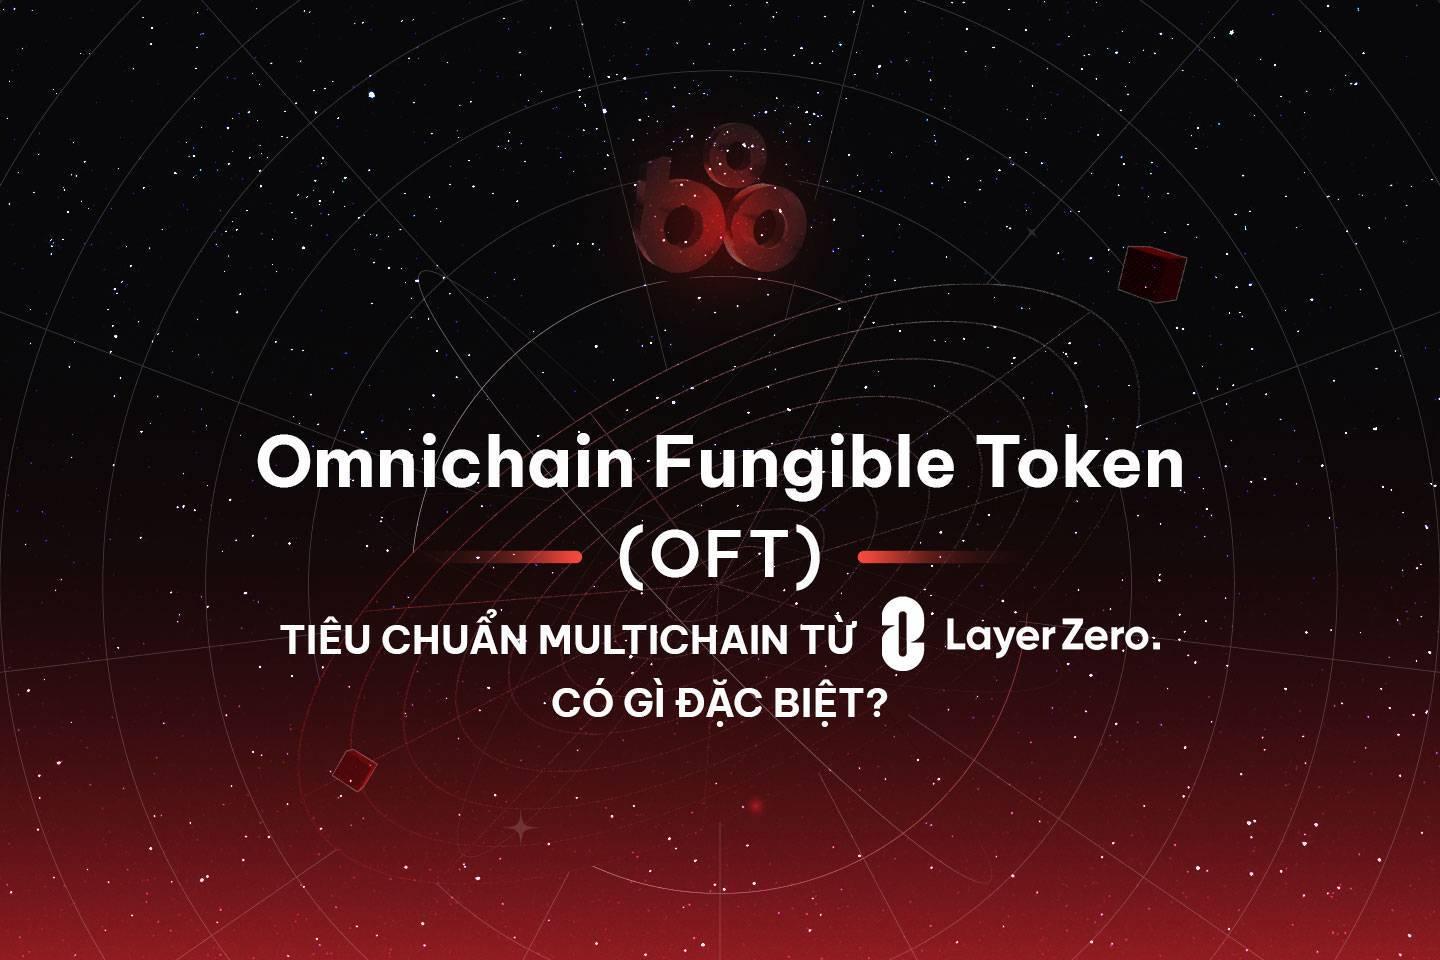 omnichain-fungible-token-oft-la-gi-tieu-chuan-multichain-cho-fungible-token-cua-layerzero